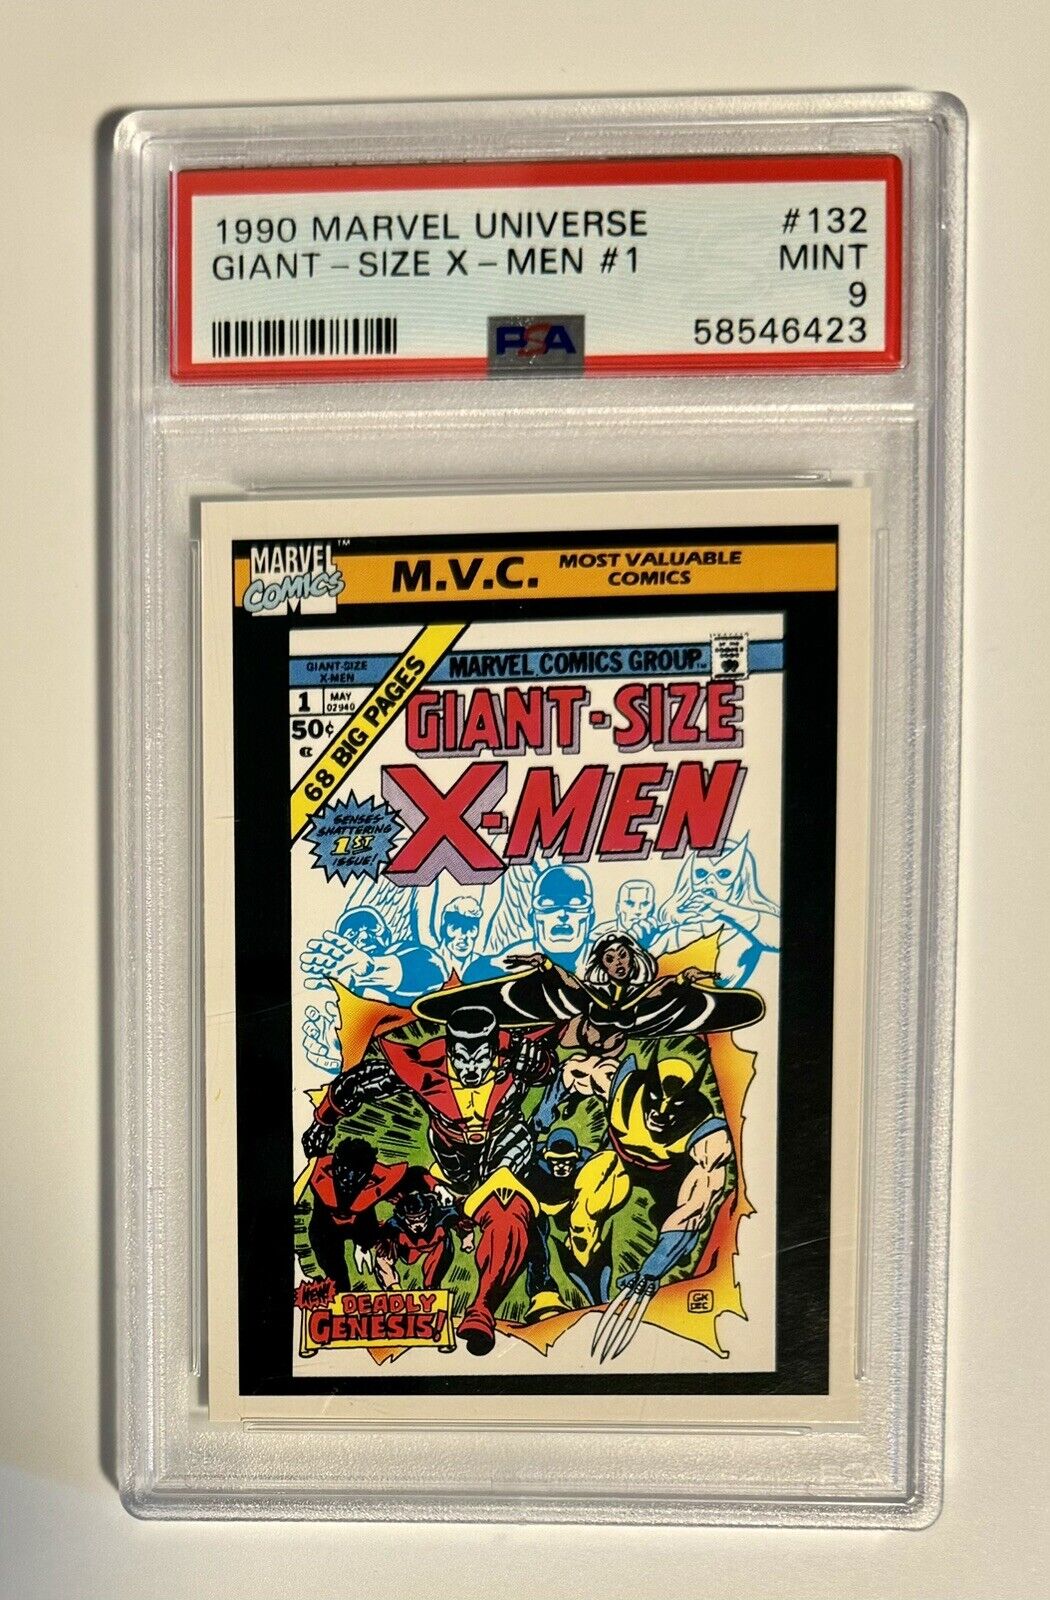 1990 Mavel Universe #132 Giant-Size X-Men #1 PSA Mint 9